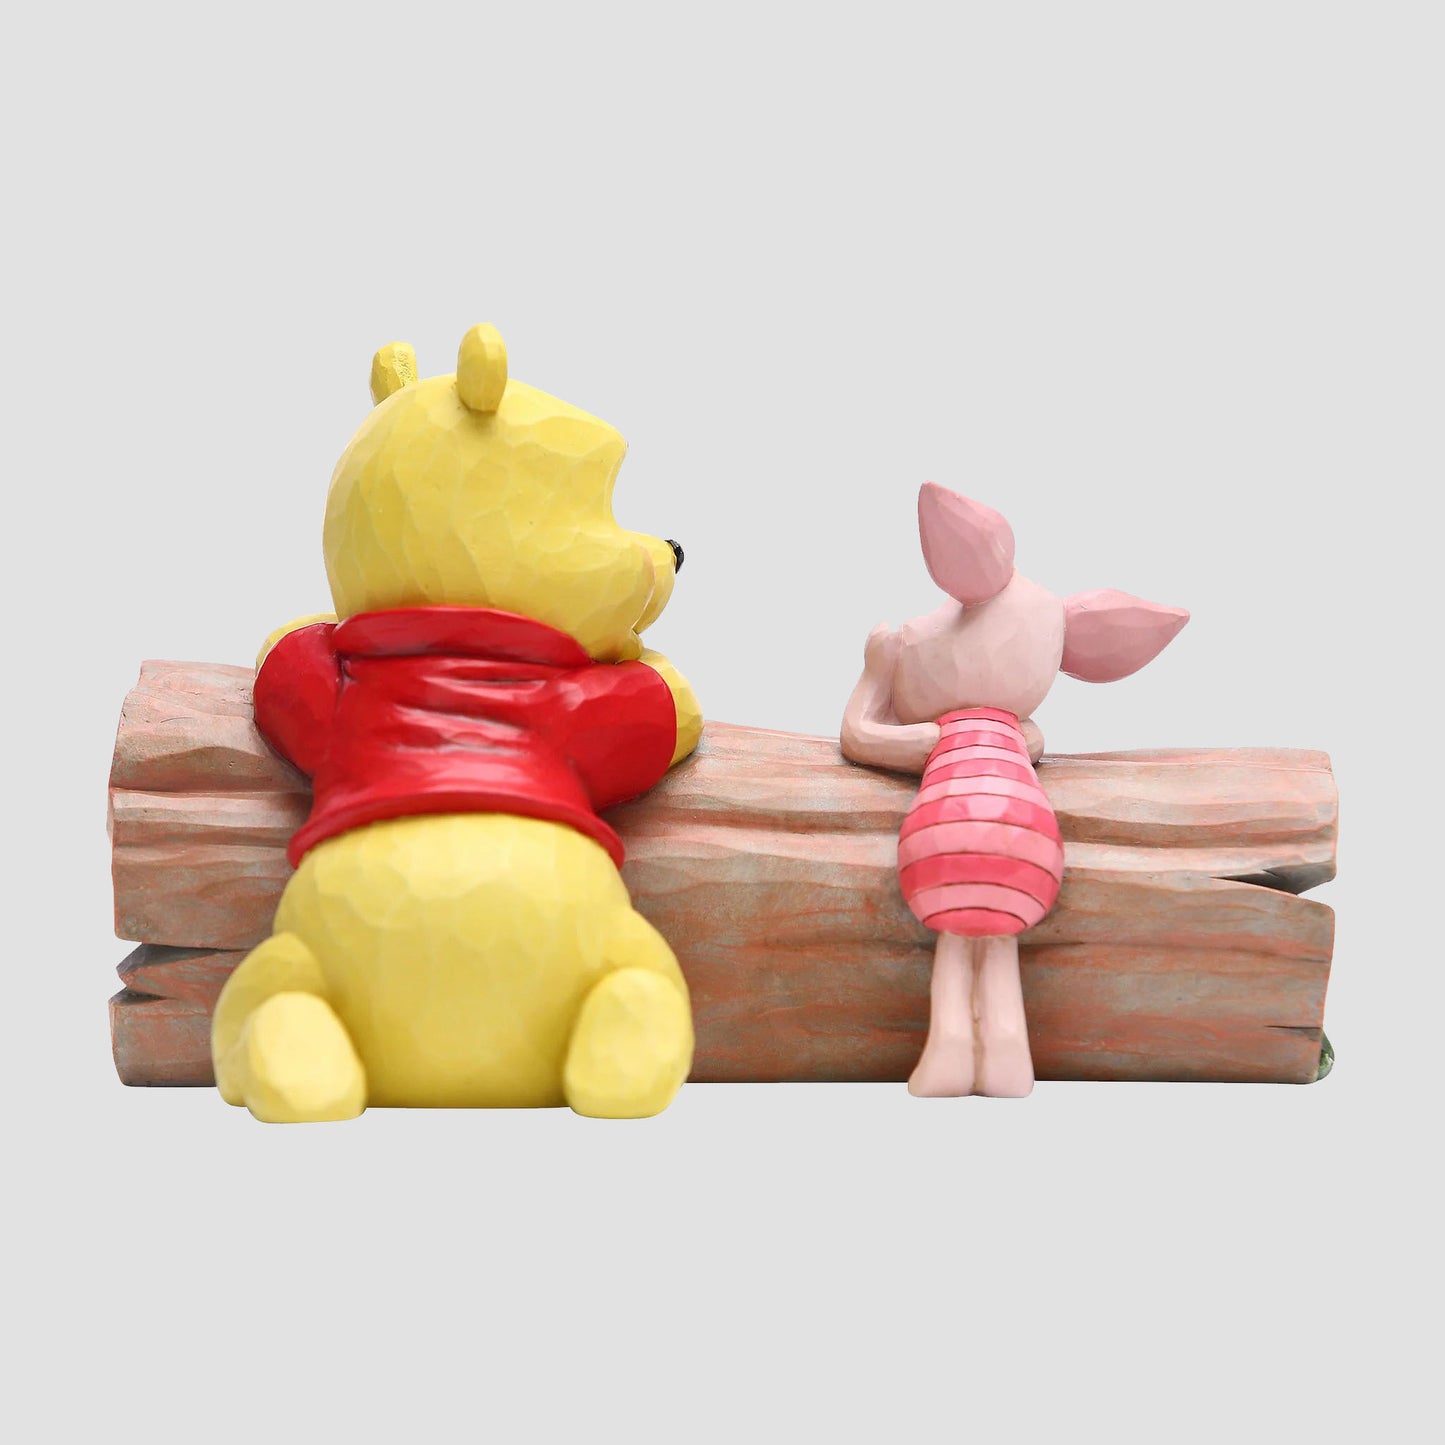 Winnie the Pooh & Piglet "Truncated Conversation" Jim Shore Disney Traditions Statue